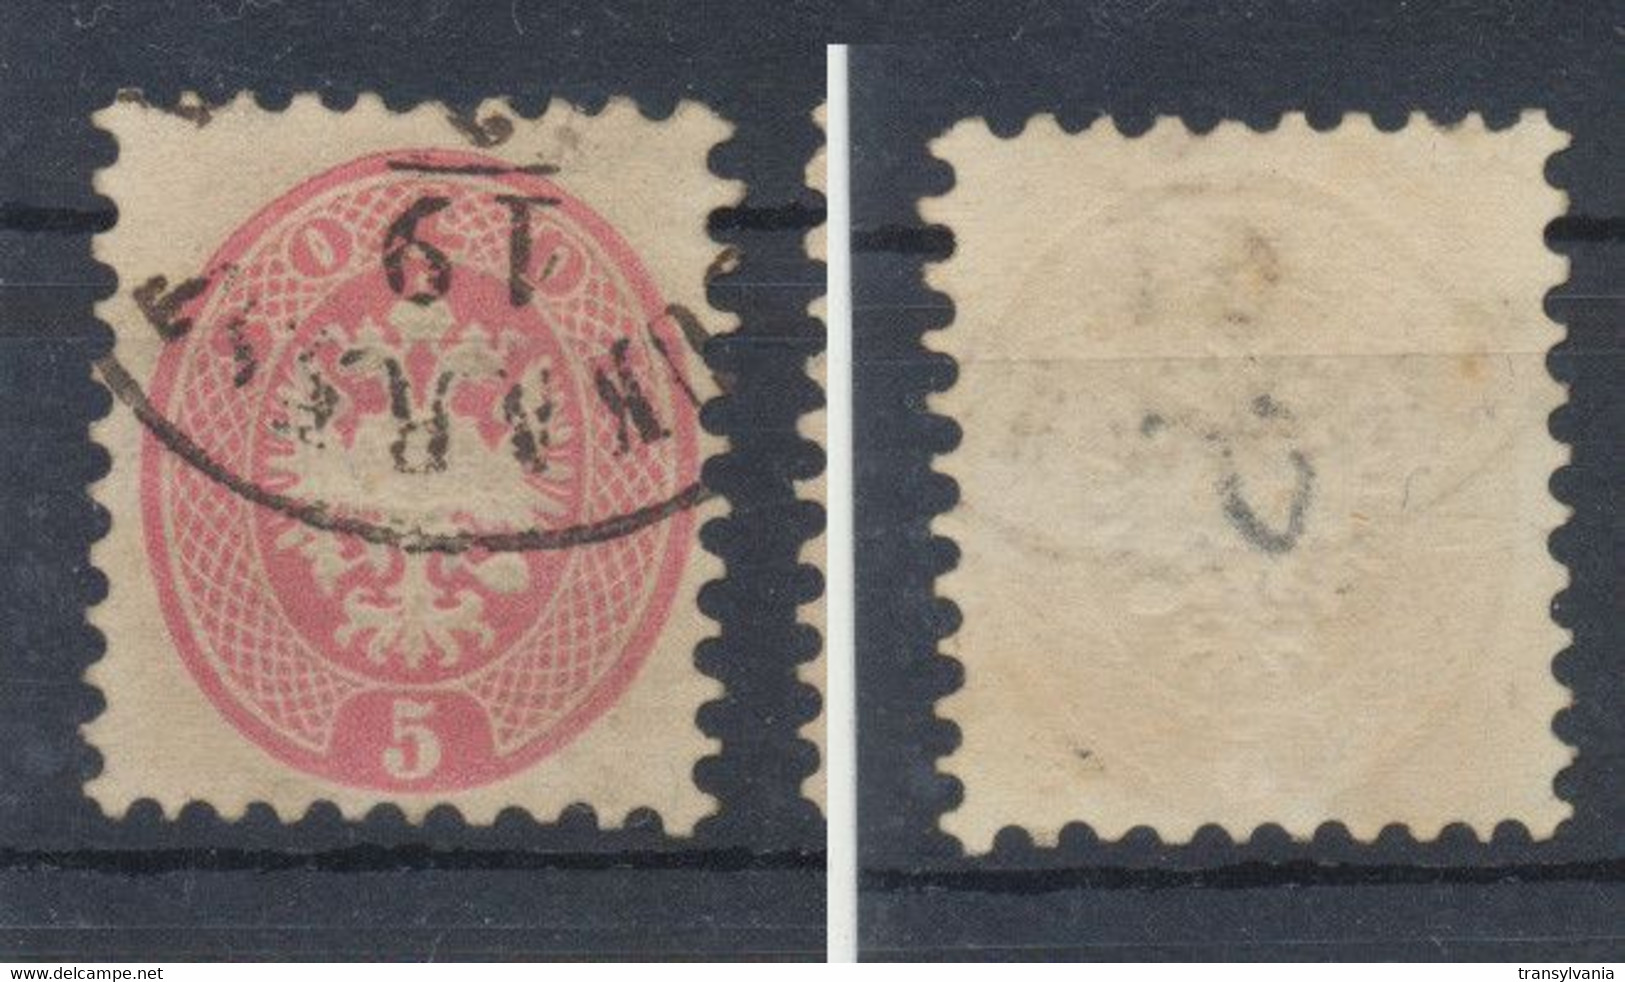 Romania 1864 Austria Post In Levant 5 Kreuzer Stamp With Bukarest Rekomandirt Cancellation Applied At Bucuresti - Bezetting